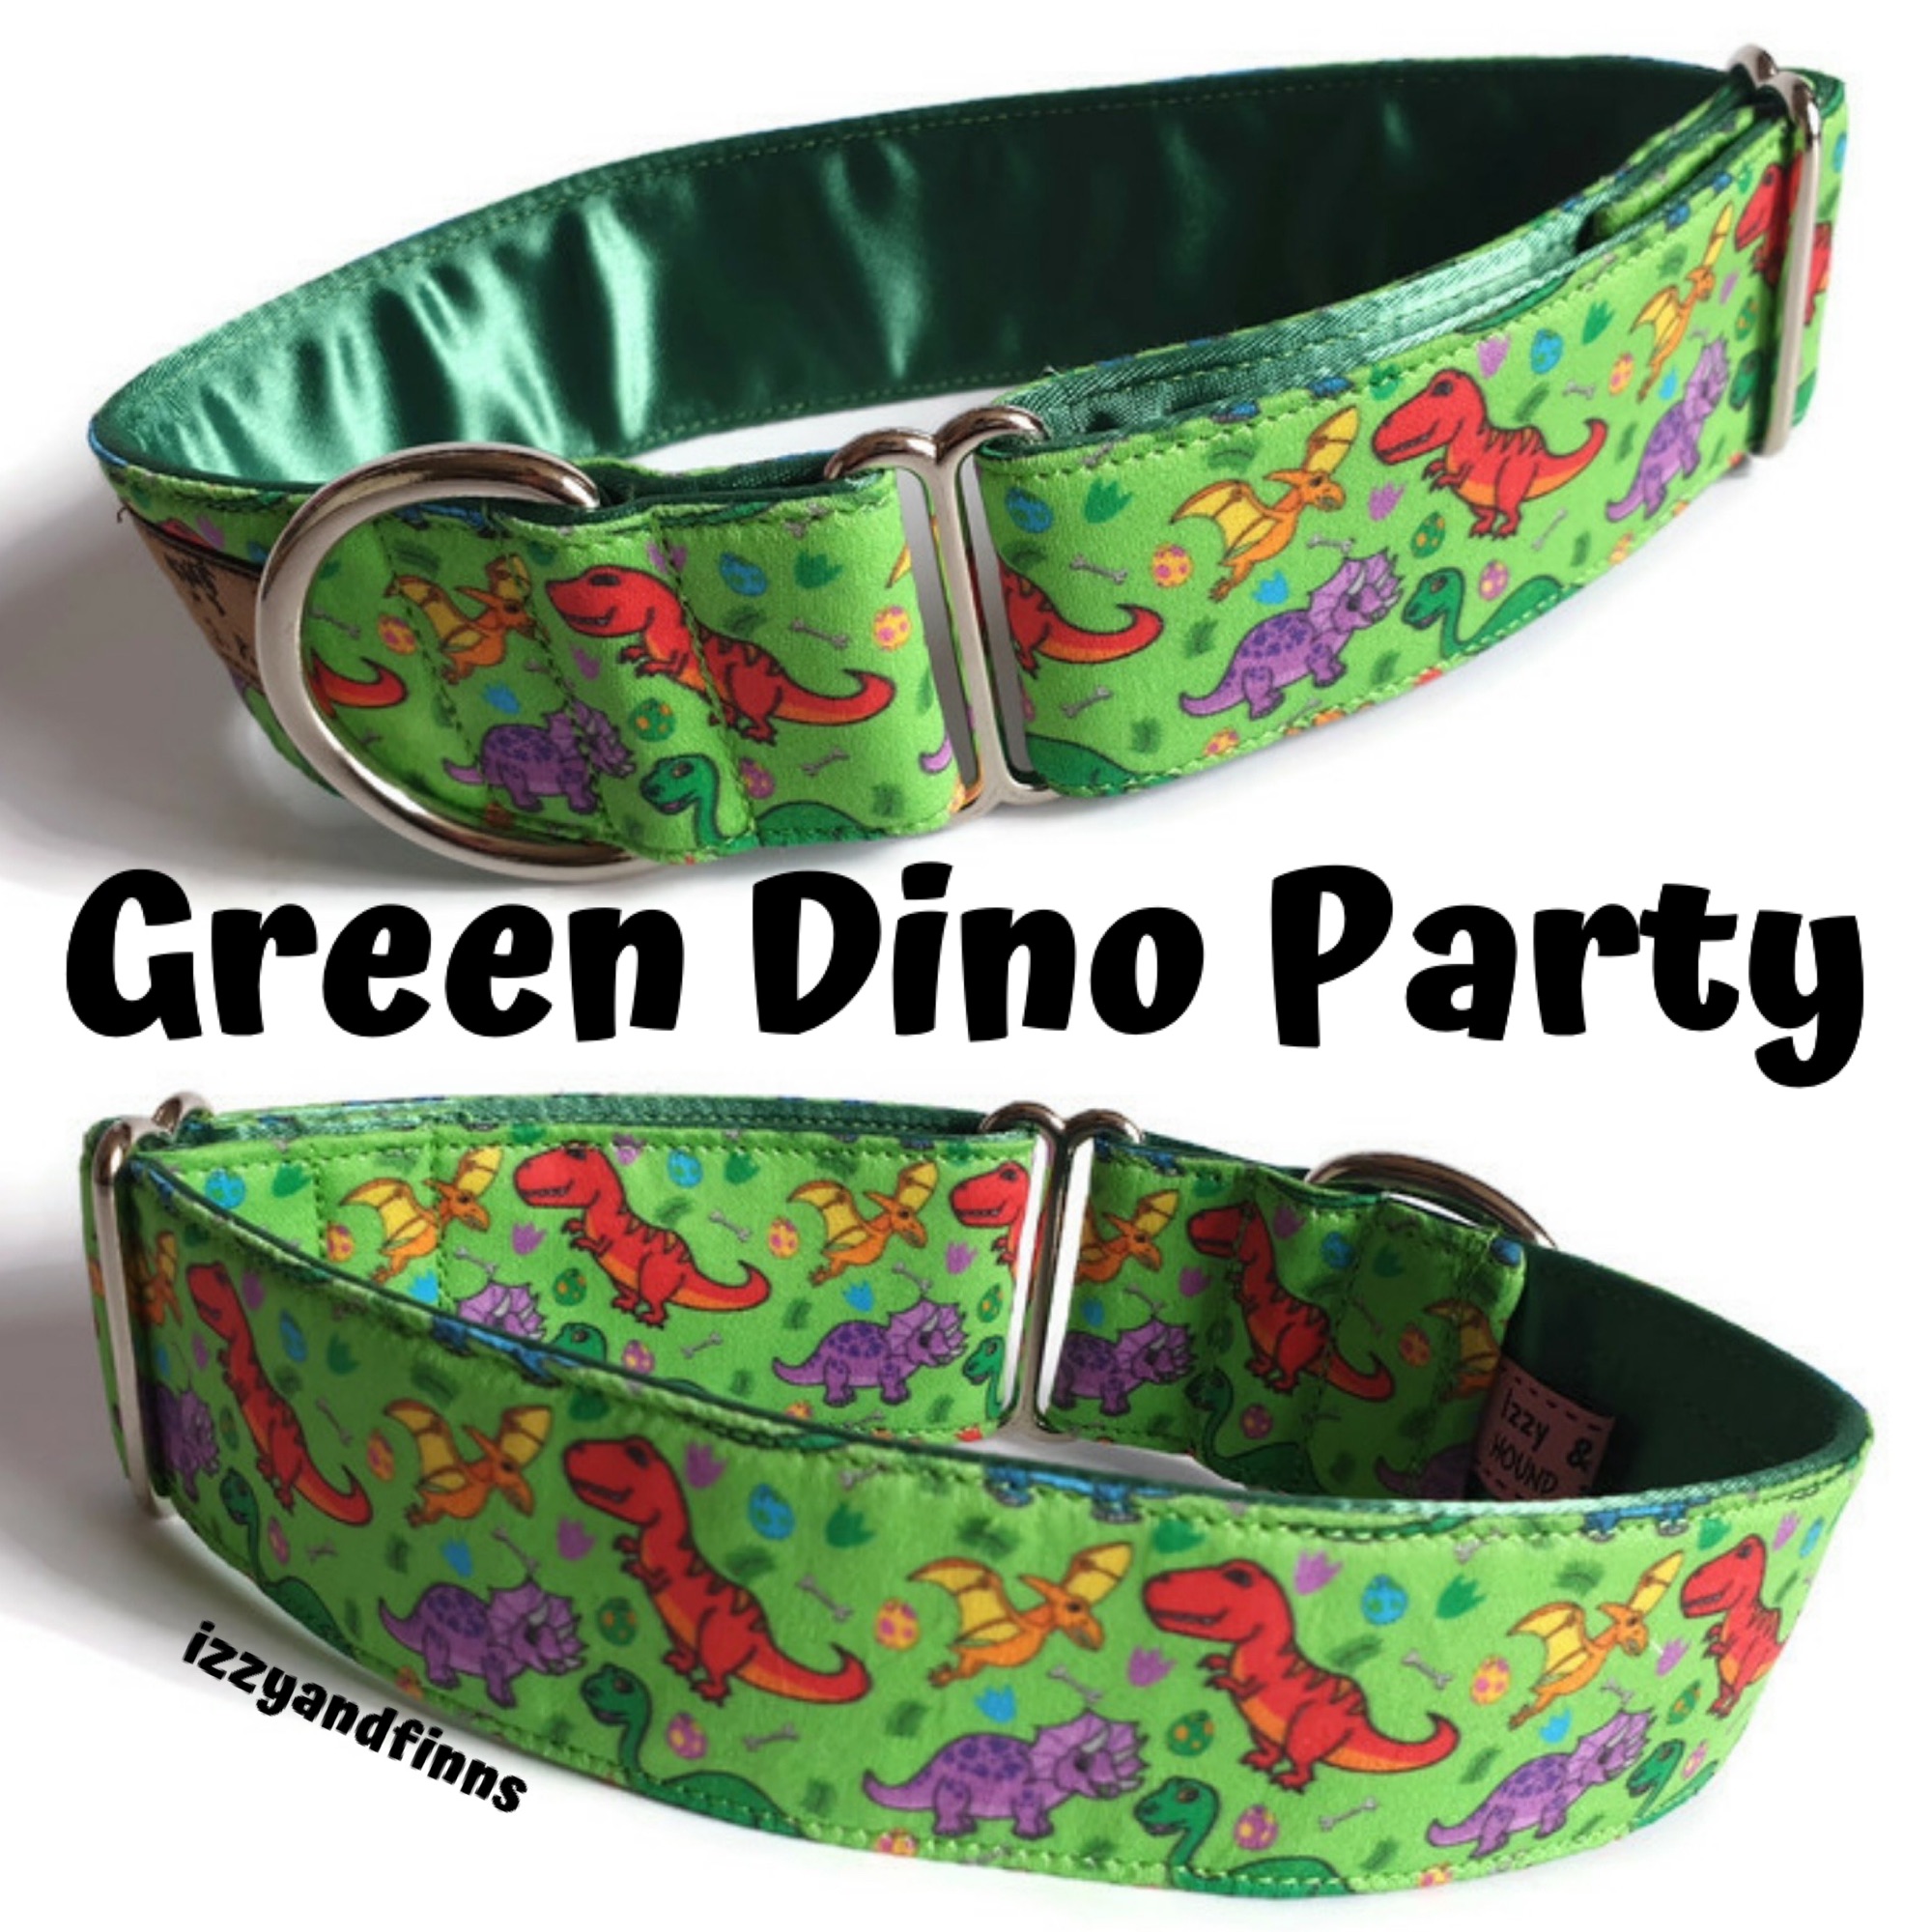 Green Dino Party